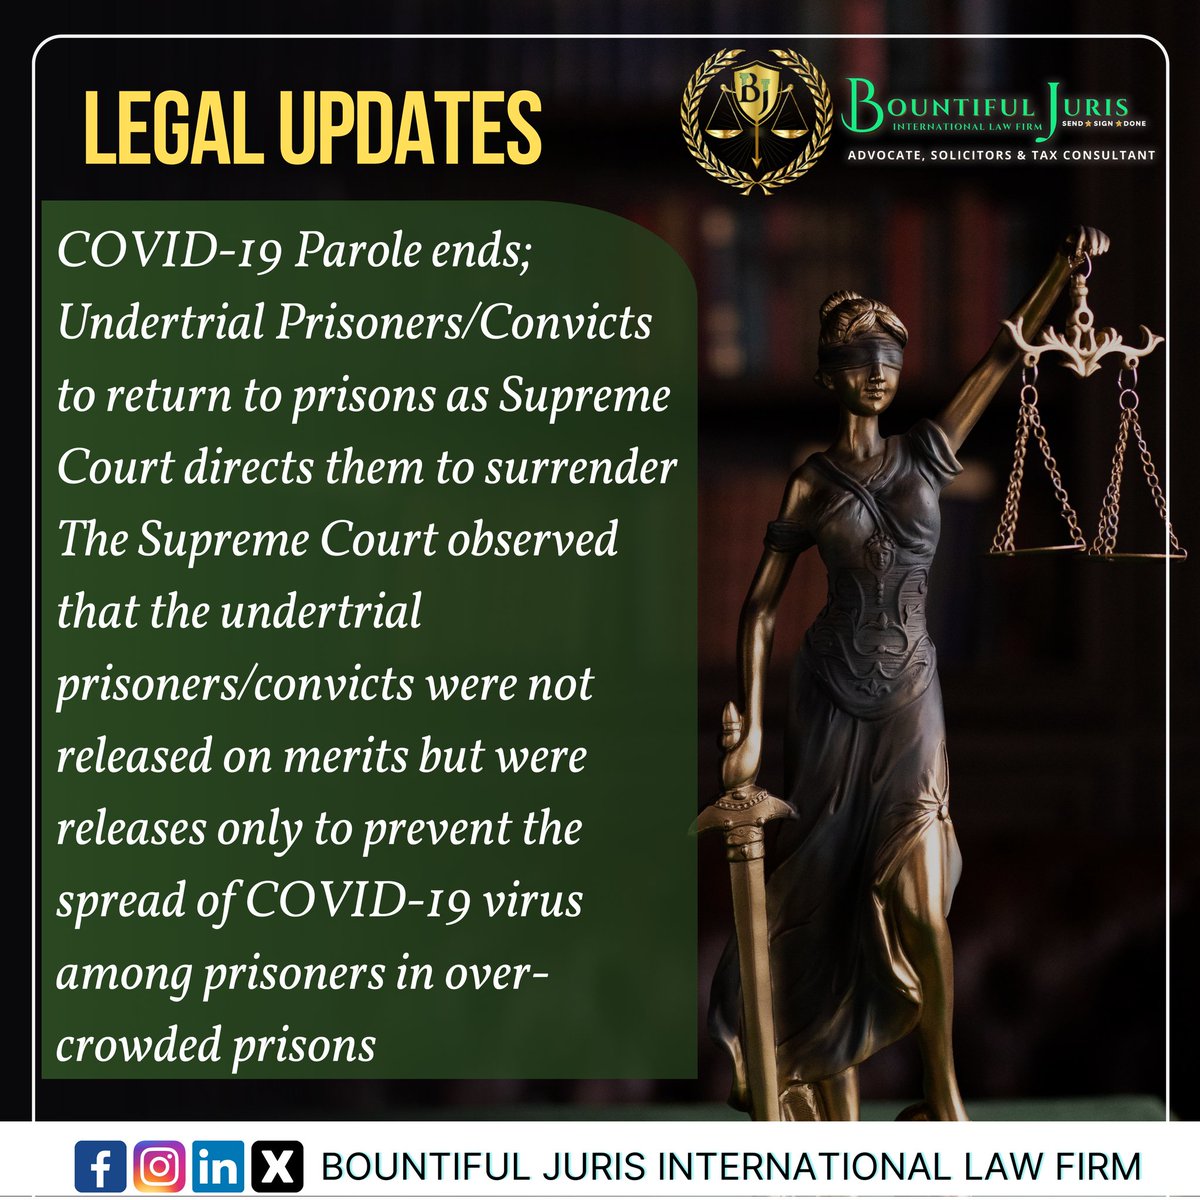 Legal Updates....
.
Follow Us For More Updates 
.
.
.
.
#covidー19 #corona #virus #covidwarriors #prison #release #pandemic #bountifuljuris